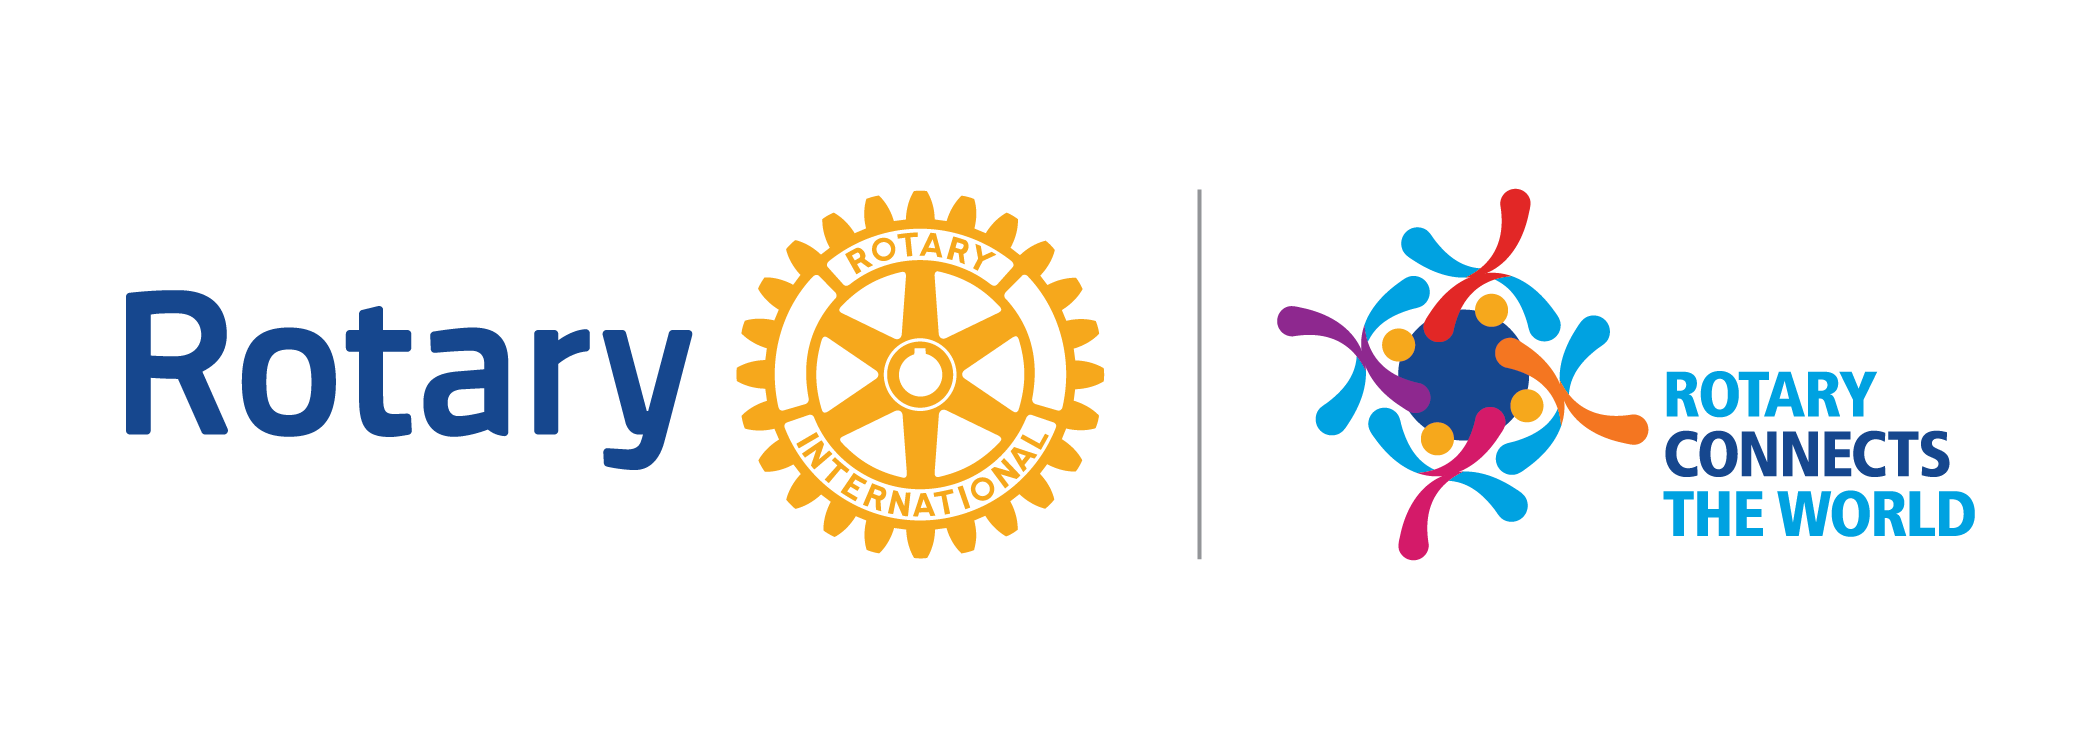 Rotary International Theme 